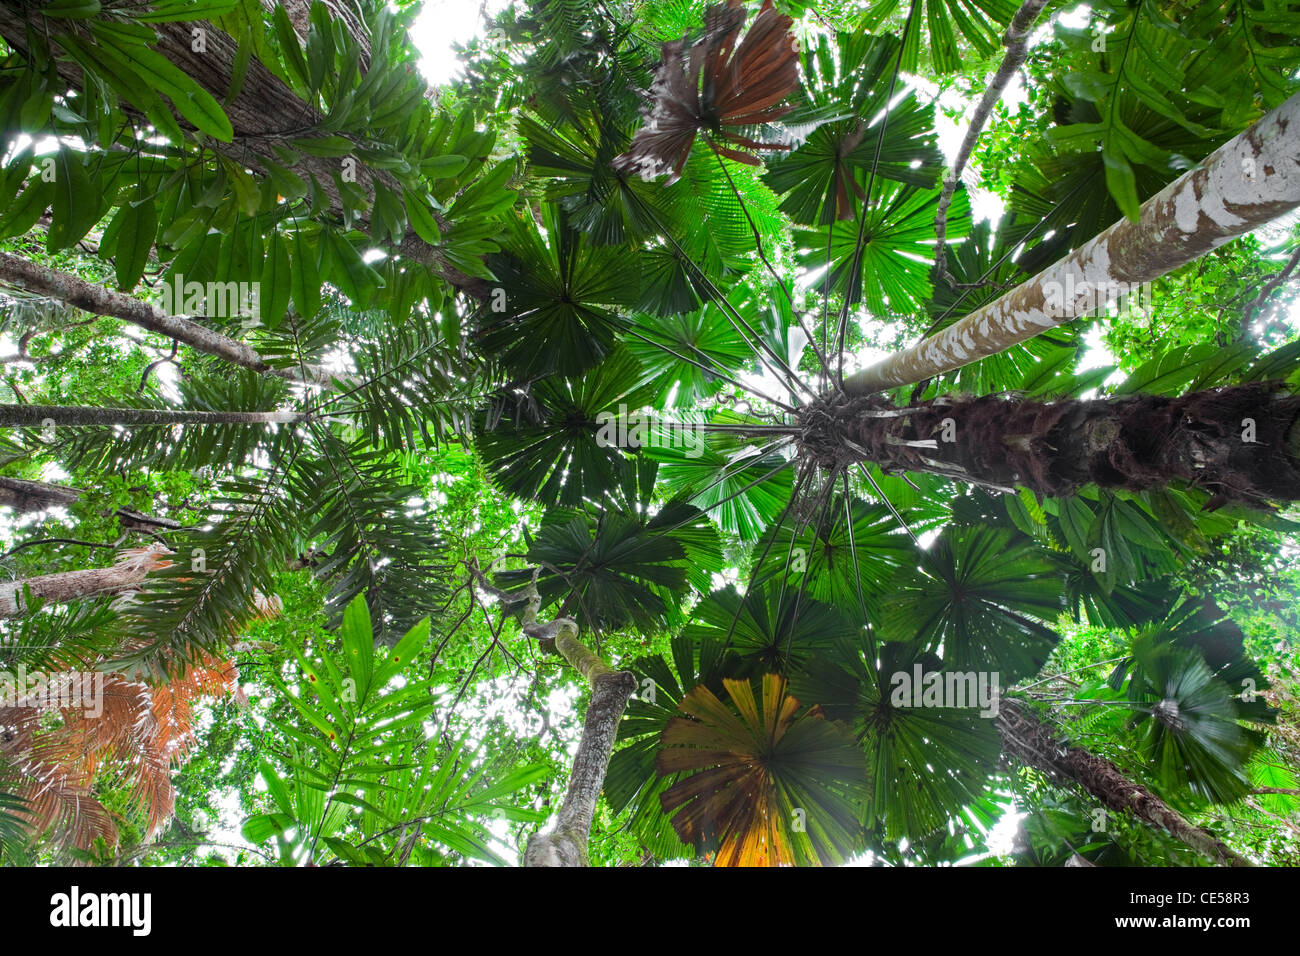 grüne Belaubung Daintree Regenwald tropischer Palmen Blätter im Regenwald Australien Baldachin üppiger vegetation Stockfoto